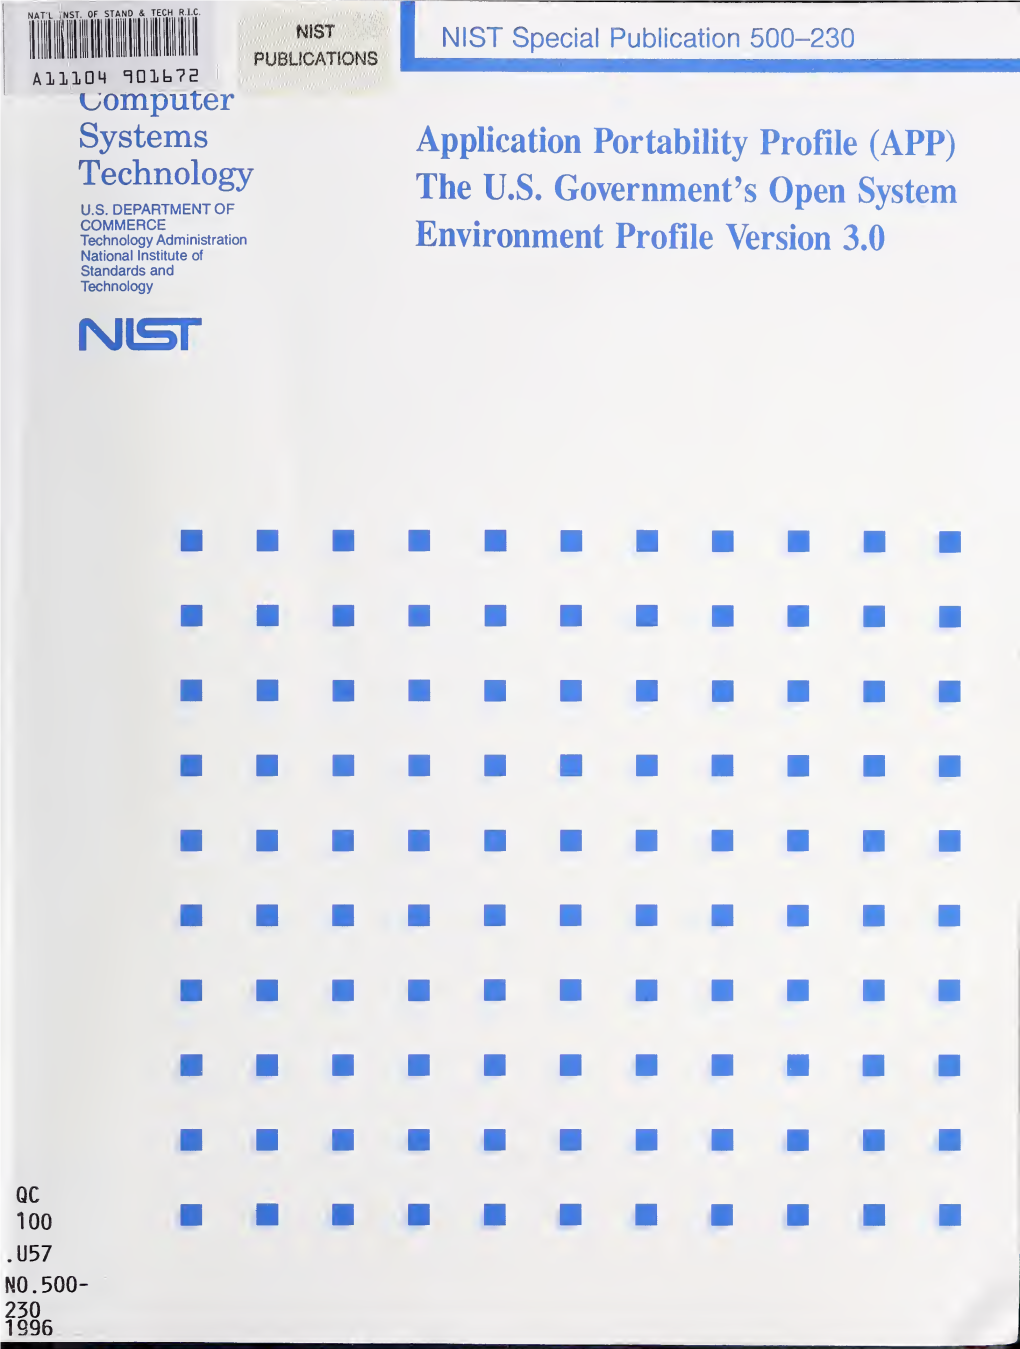 Application Portability Profile (APP) the U.S. Government's Open System Environment Profile Version 3.0